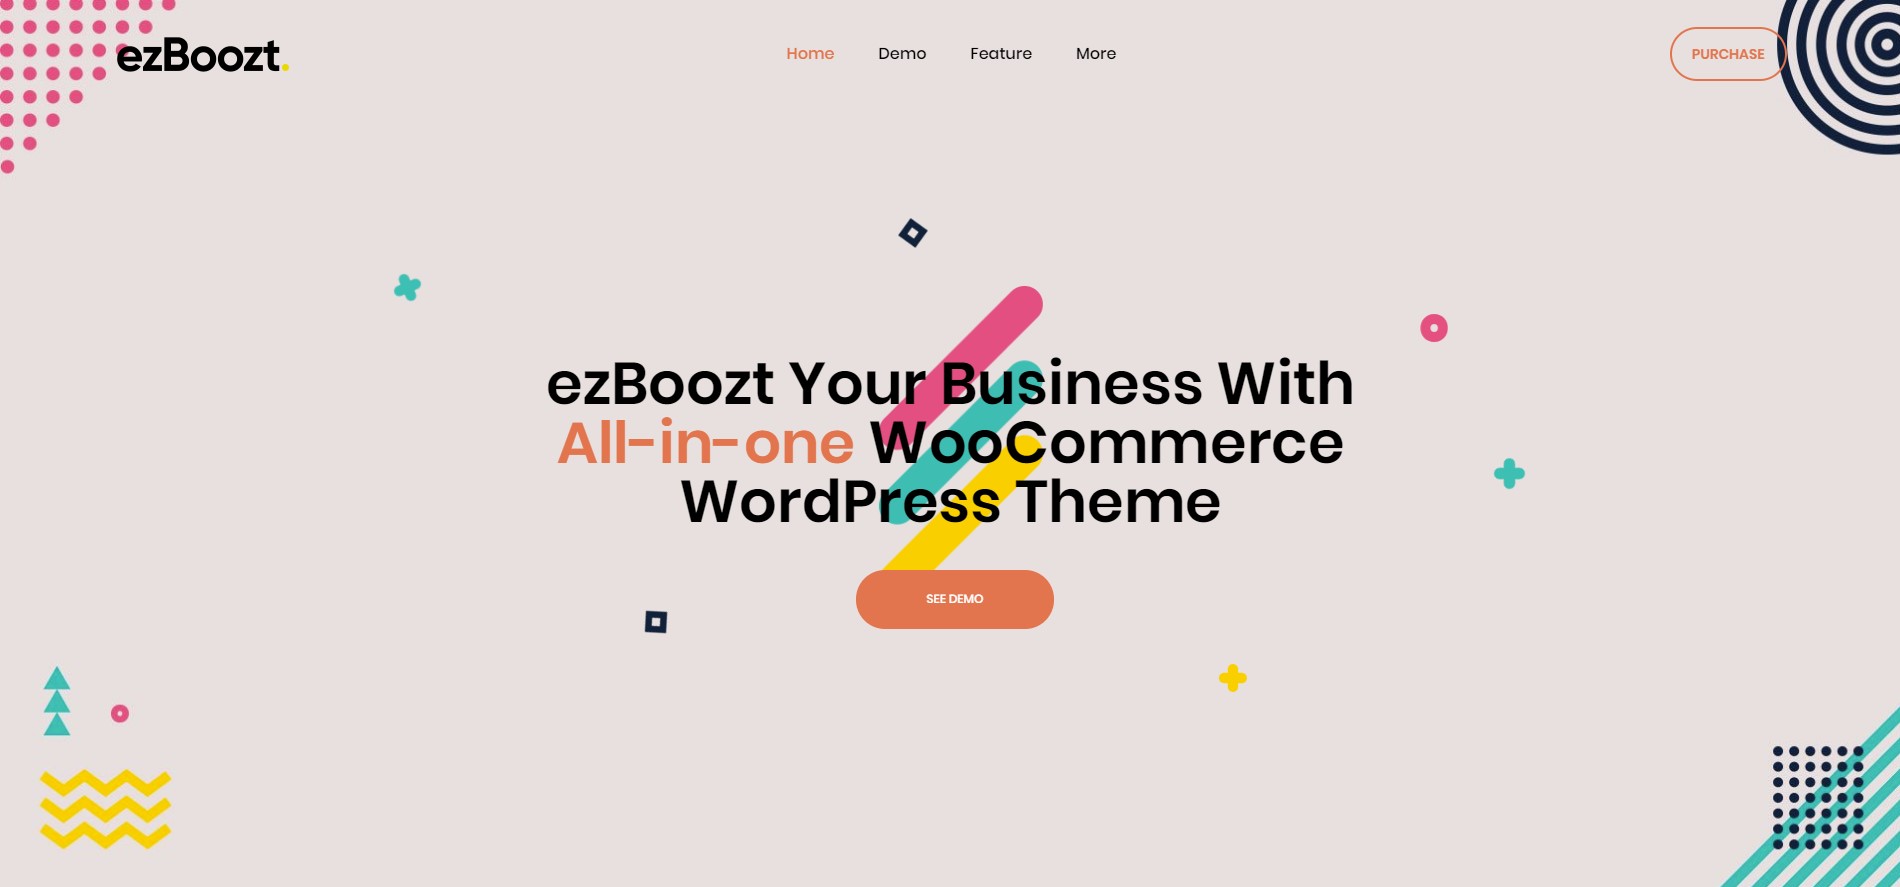 EzBoozt – All-in-one WooCommerce WordPress Theme